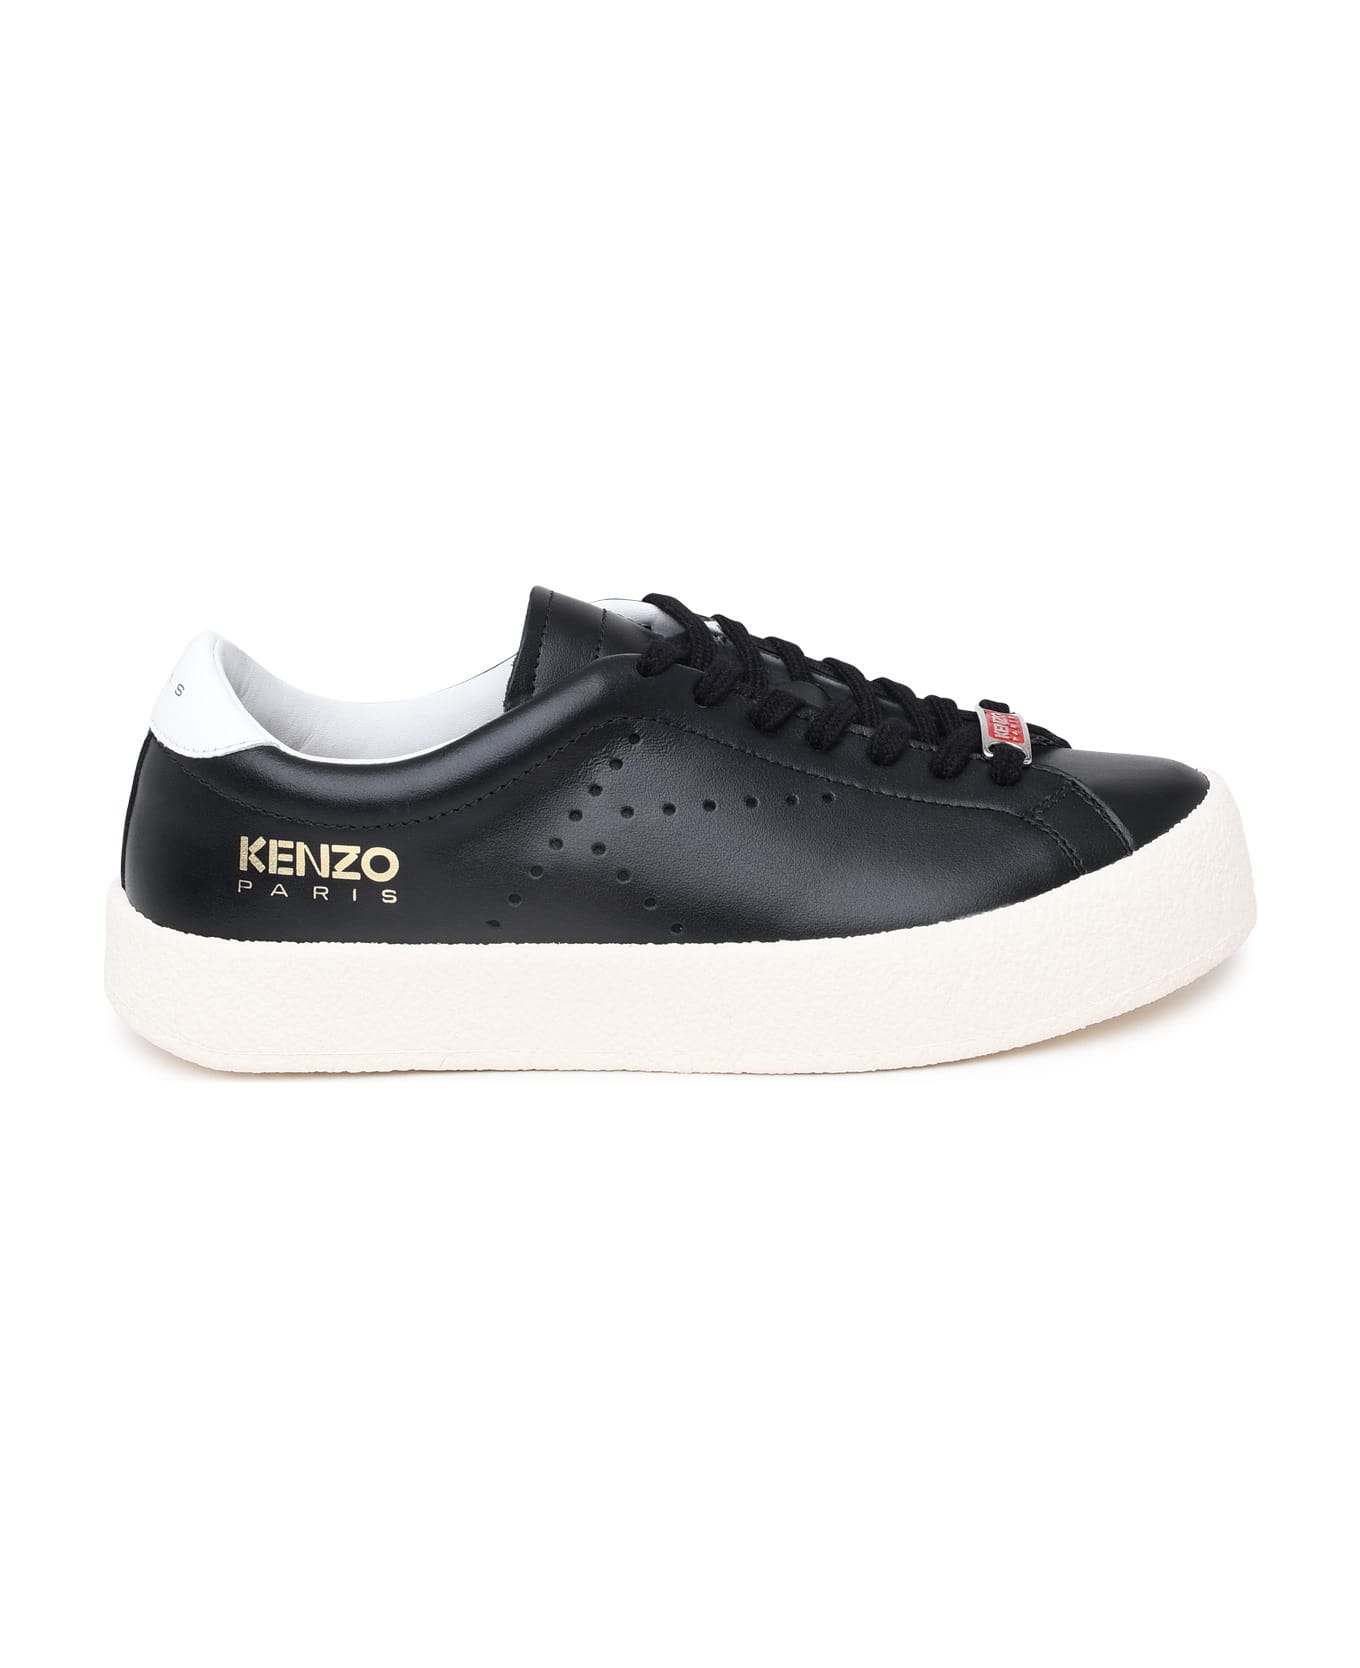 Kenzo Black Leather Sneakers - Black